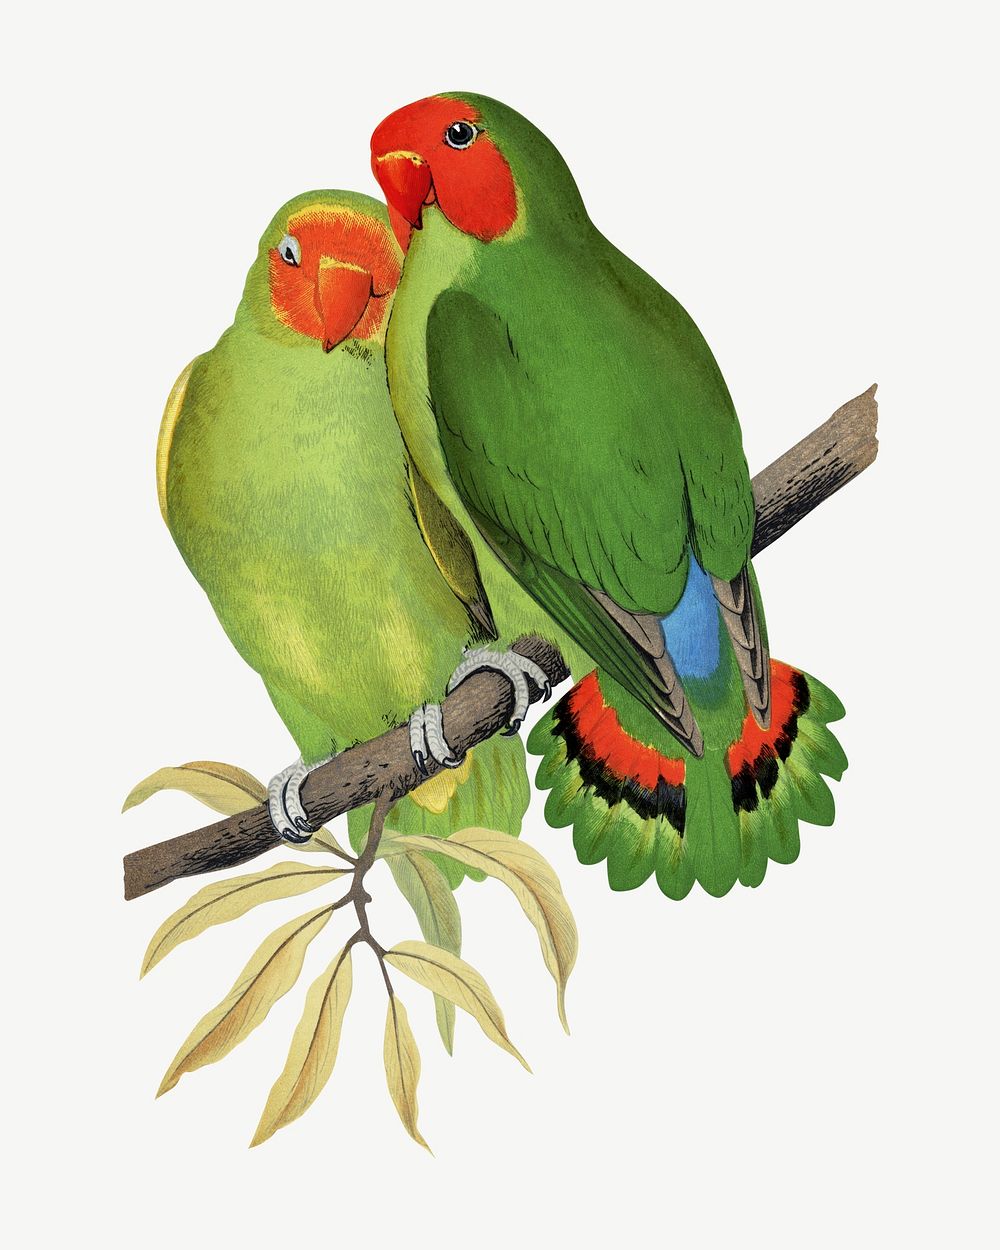 West African love-bird, vintage bird illustration psd. Remixed by rawpixel.